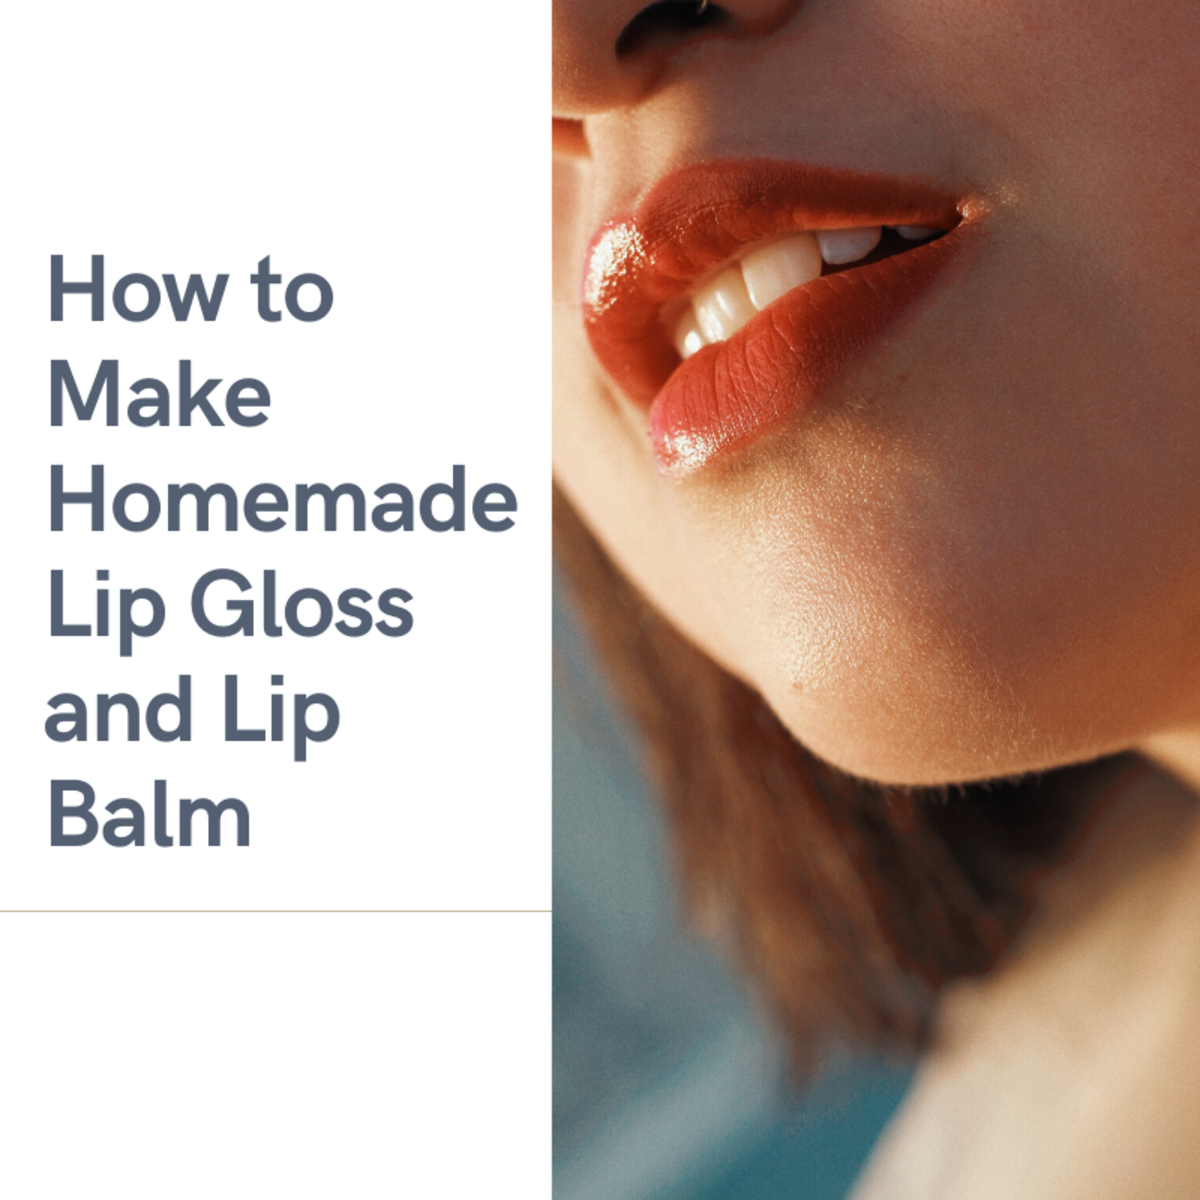 Homemade Lip Gloss and Lip Balm